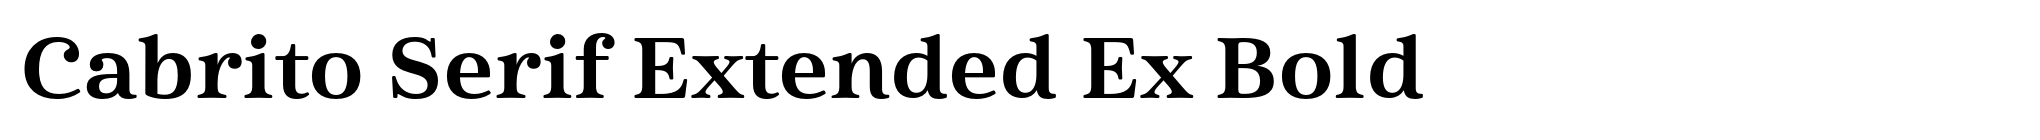 Cabrito Serif Extended Ex Bold image